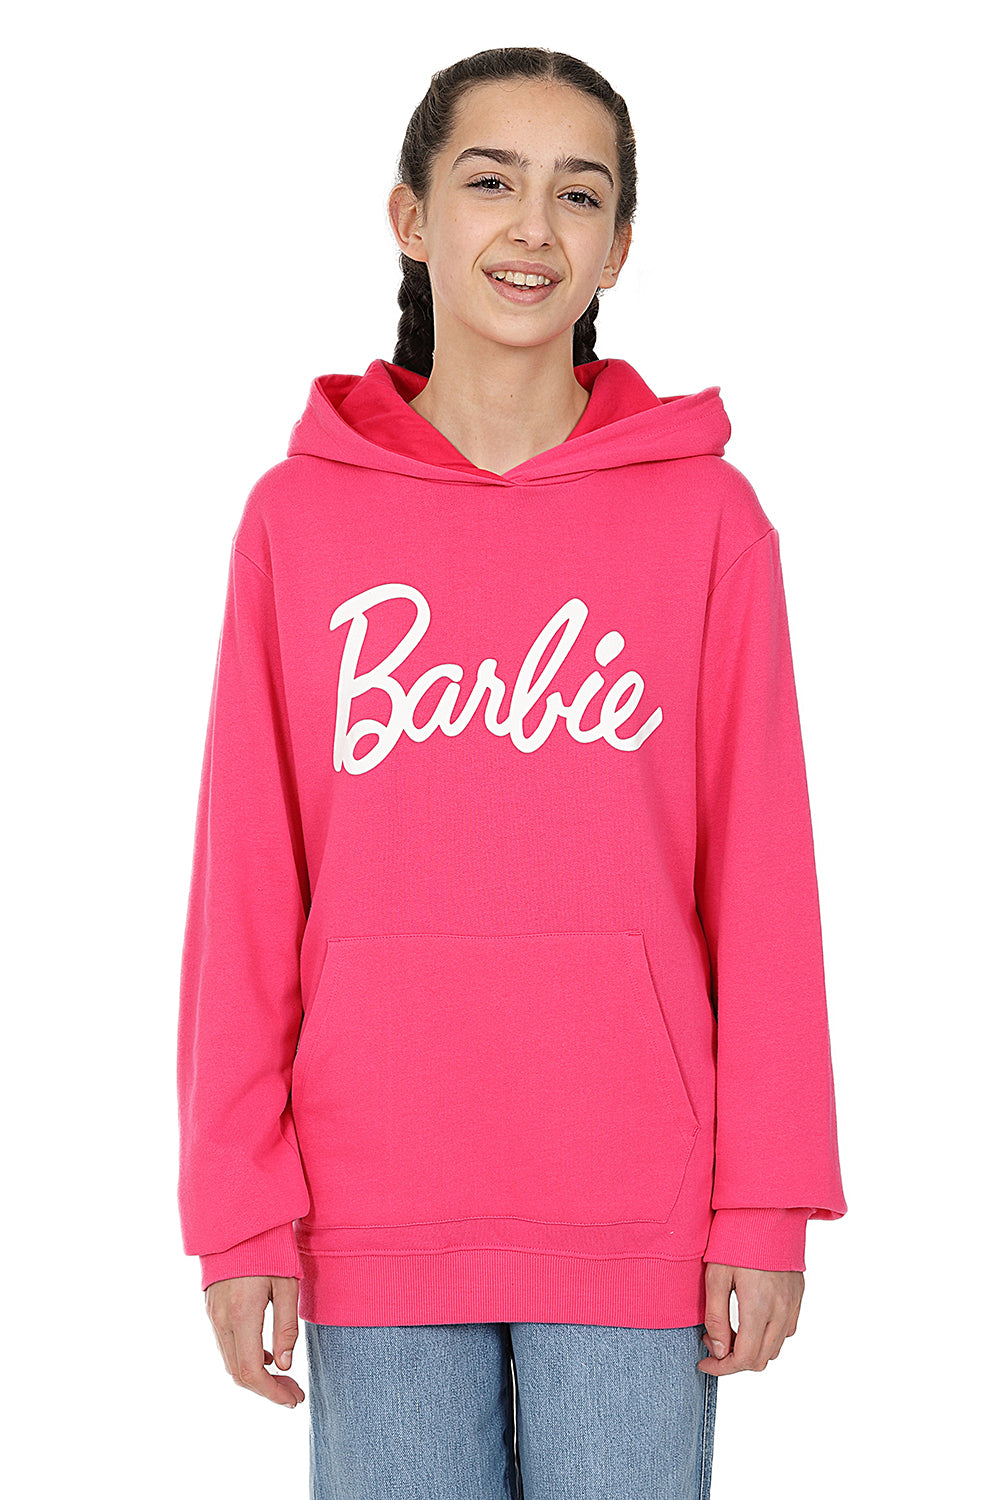 Barbie Girls Pink Hoodie Cotton Kids